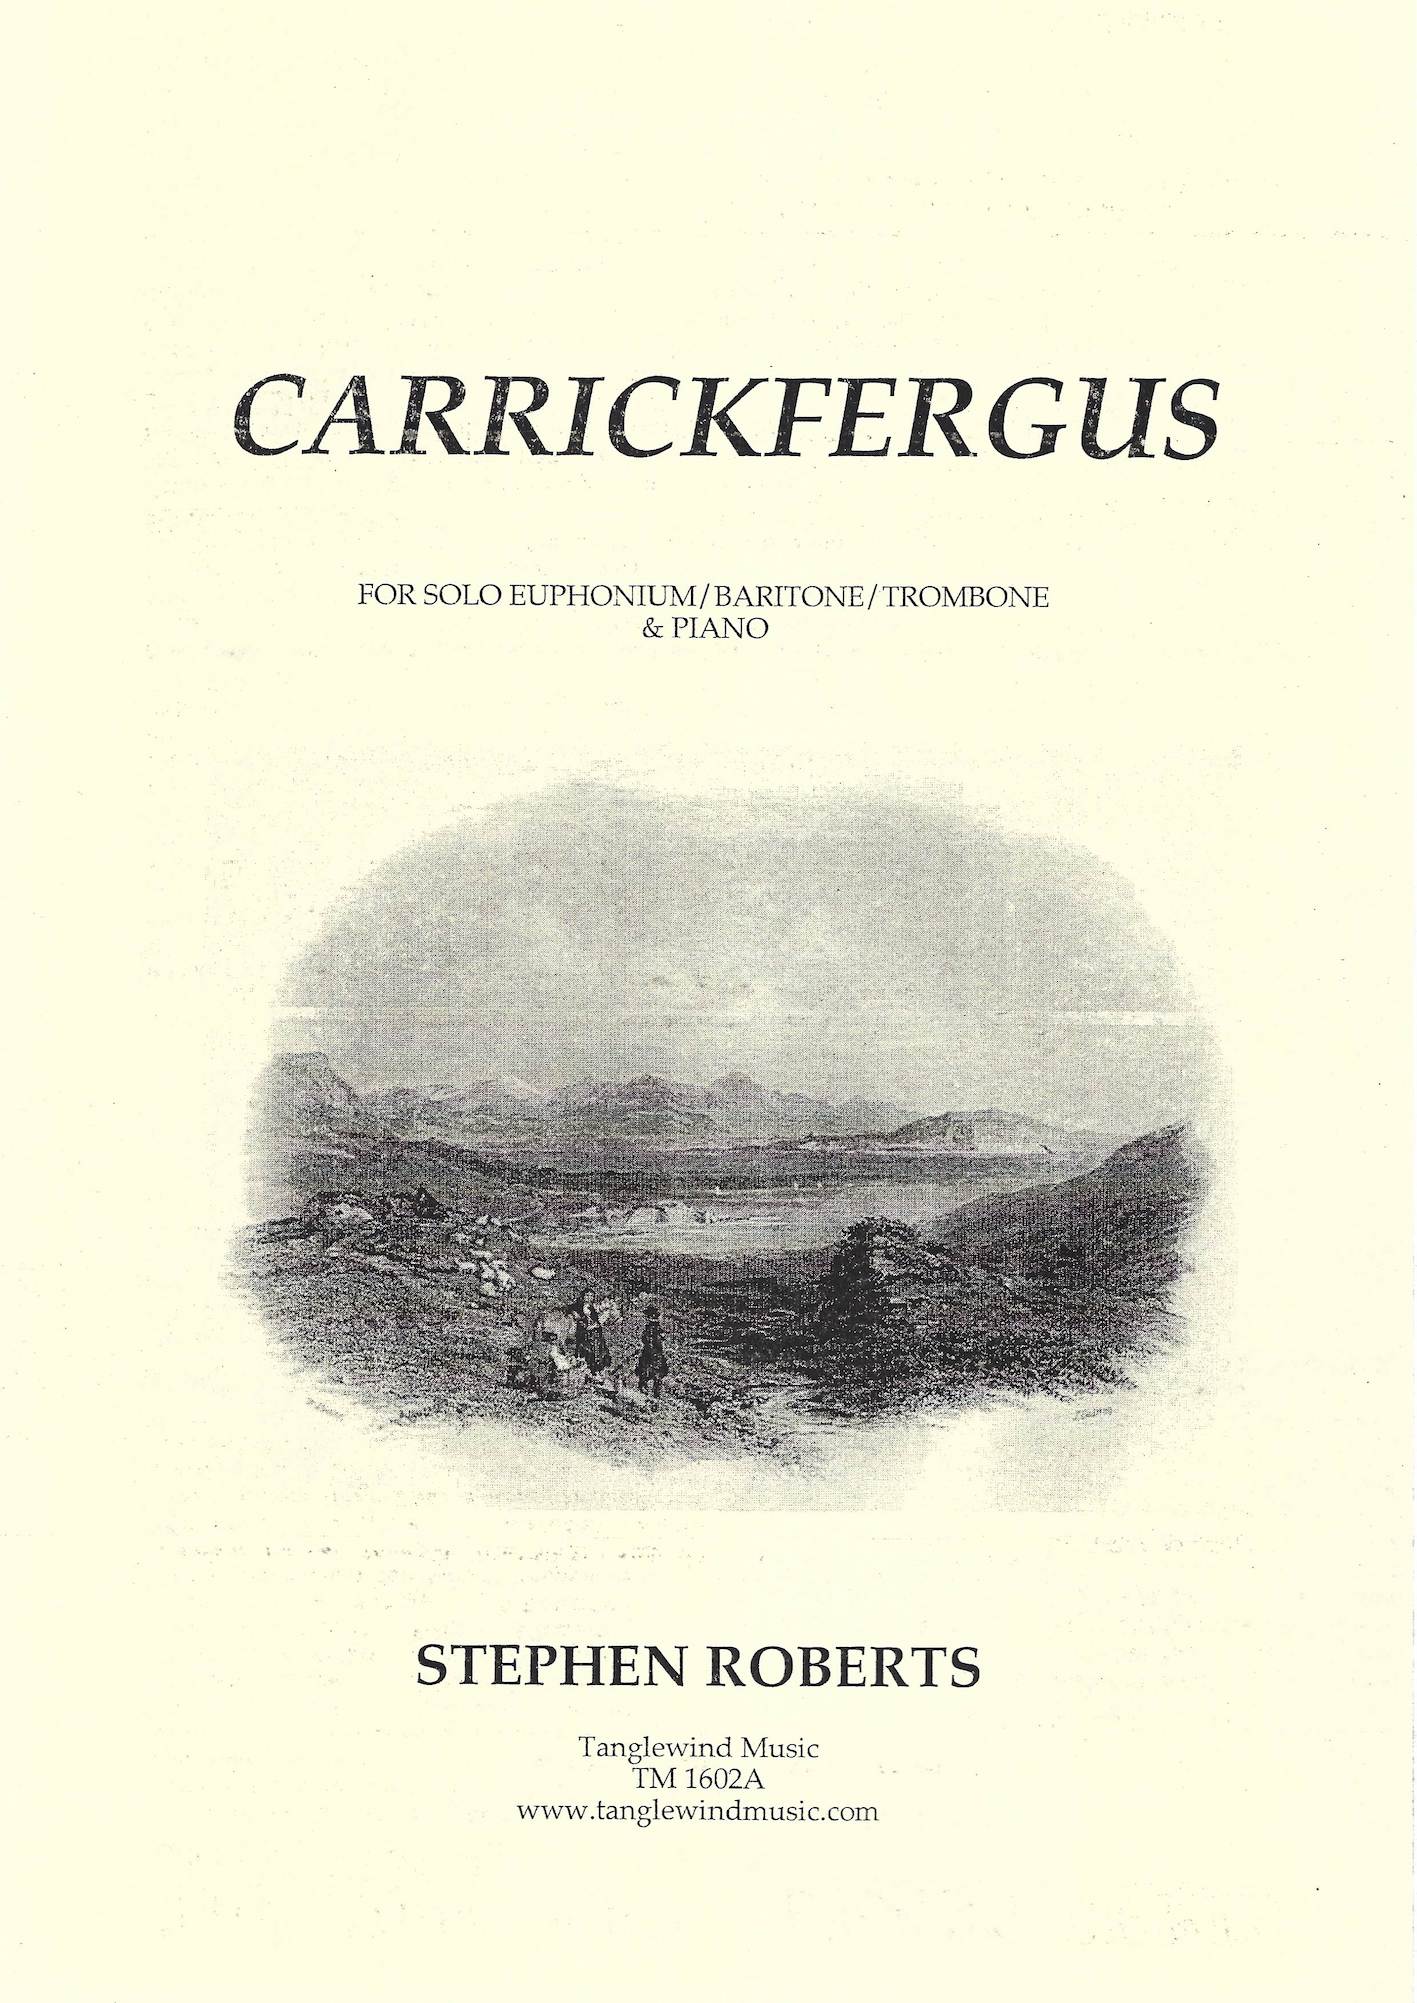 Carrickfergus - Trad. Irish Air Arr. Stephen Roberts - Euphonium (or baritone or trombone) with piano accompaniment